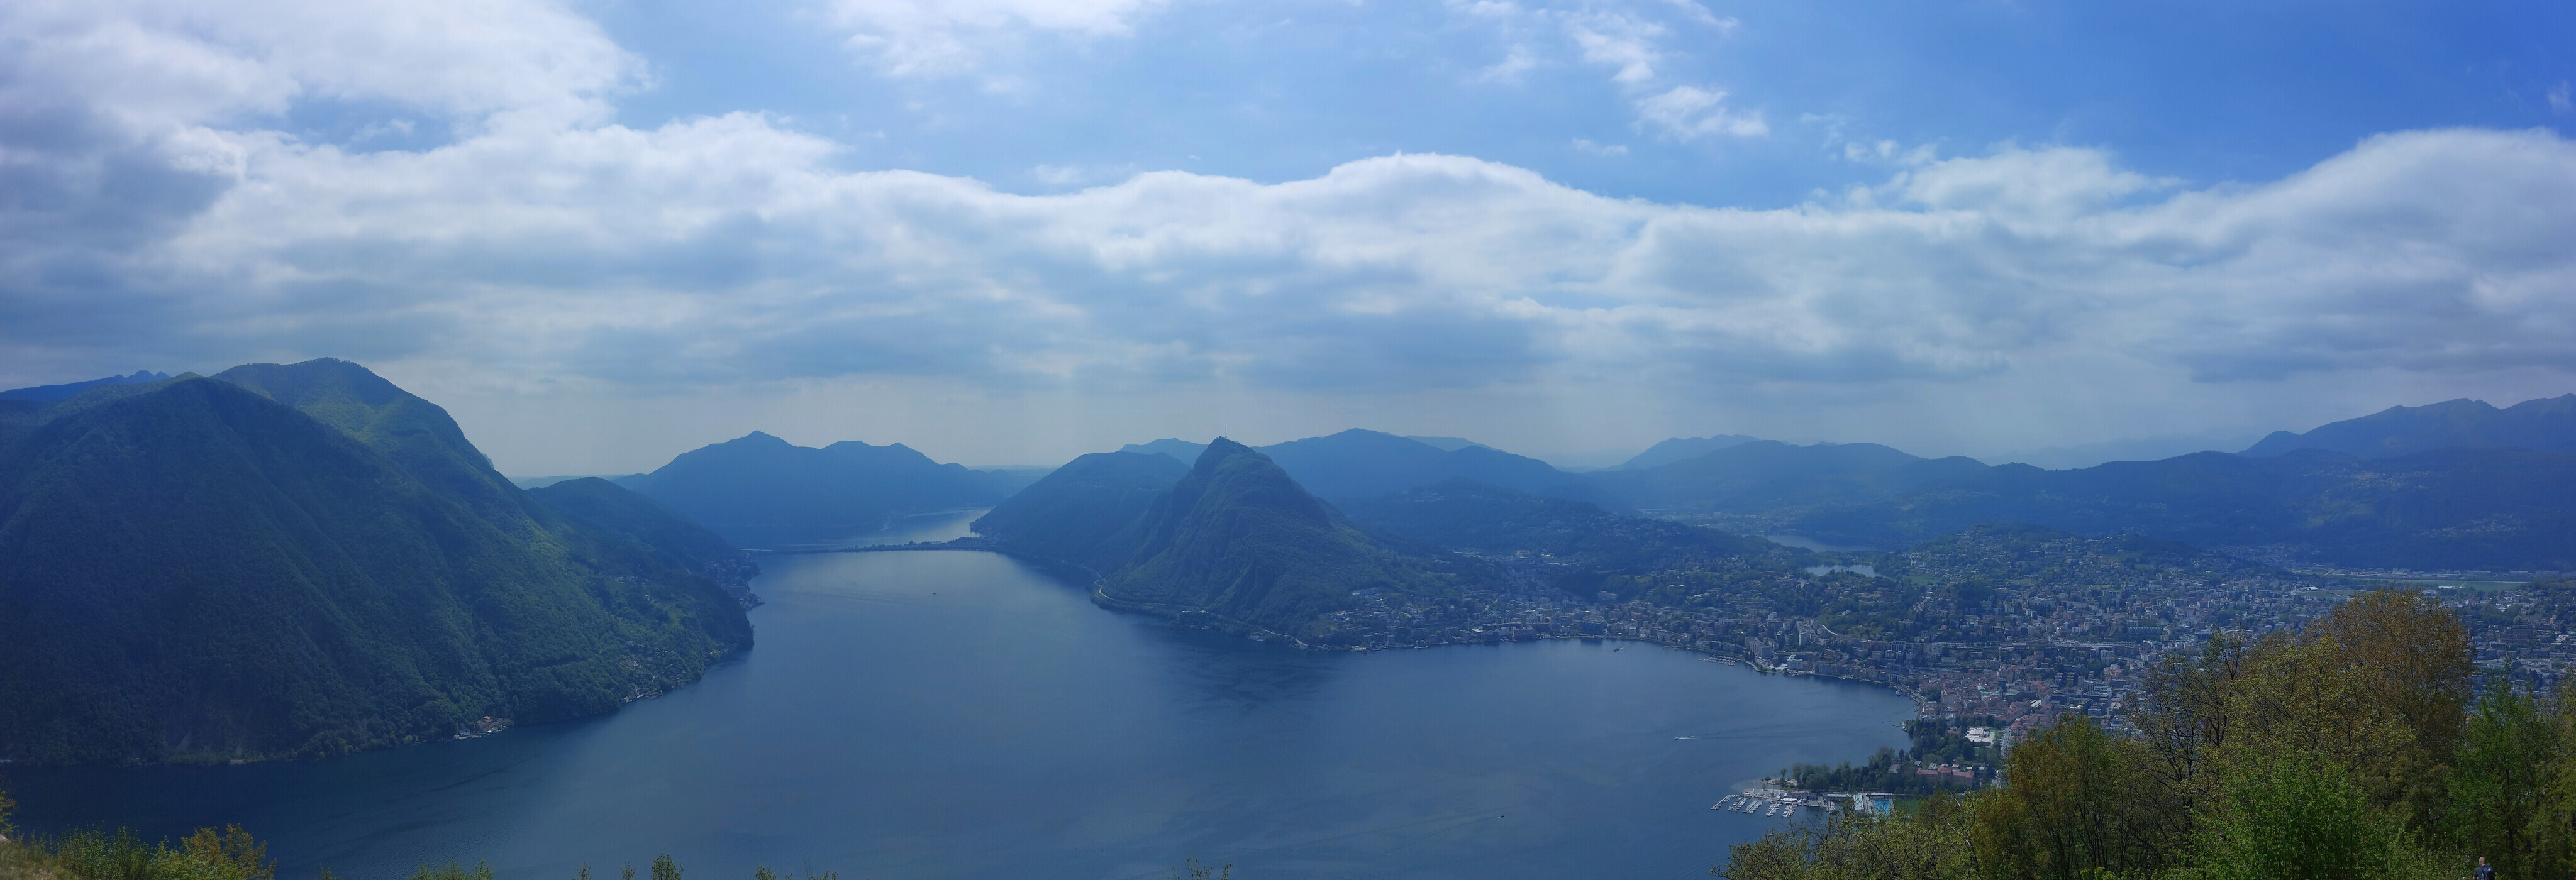 San Salvatore and Lugano from summit of Monte Brè